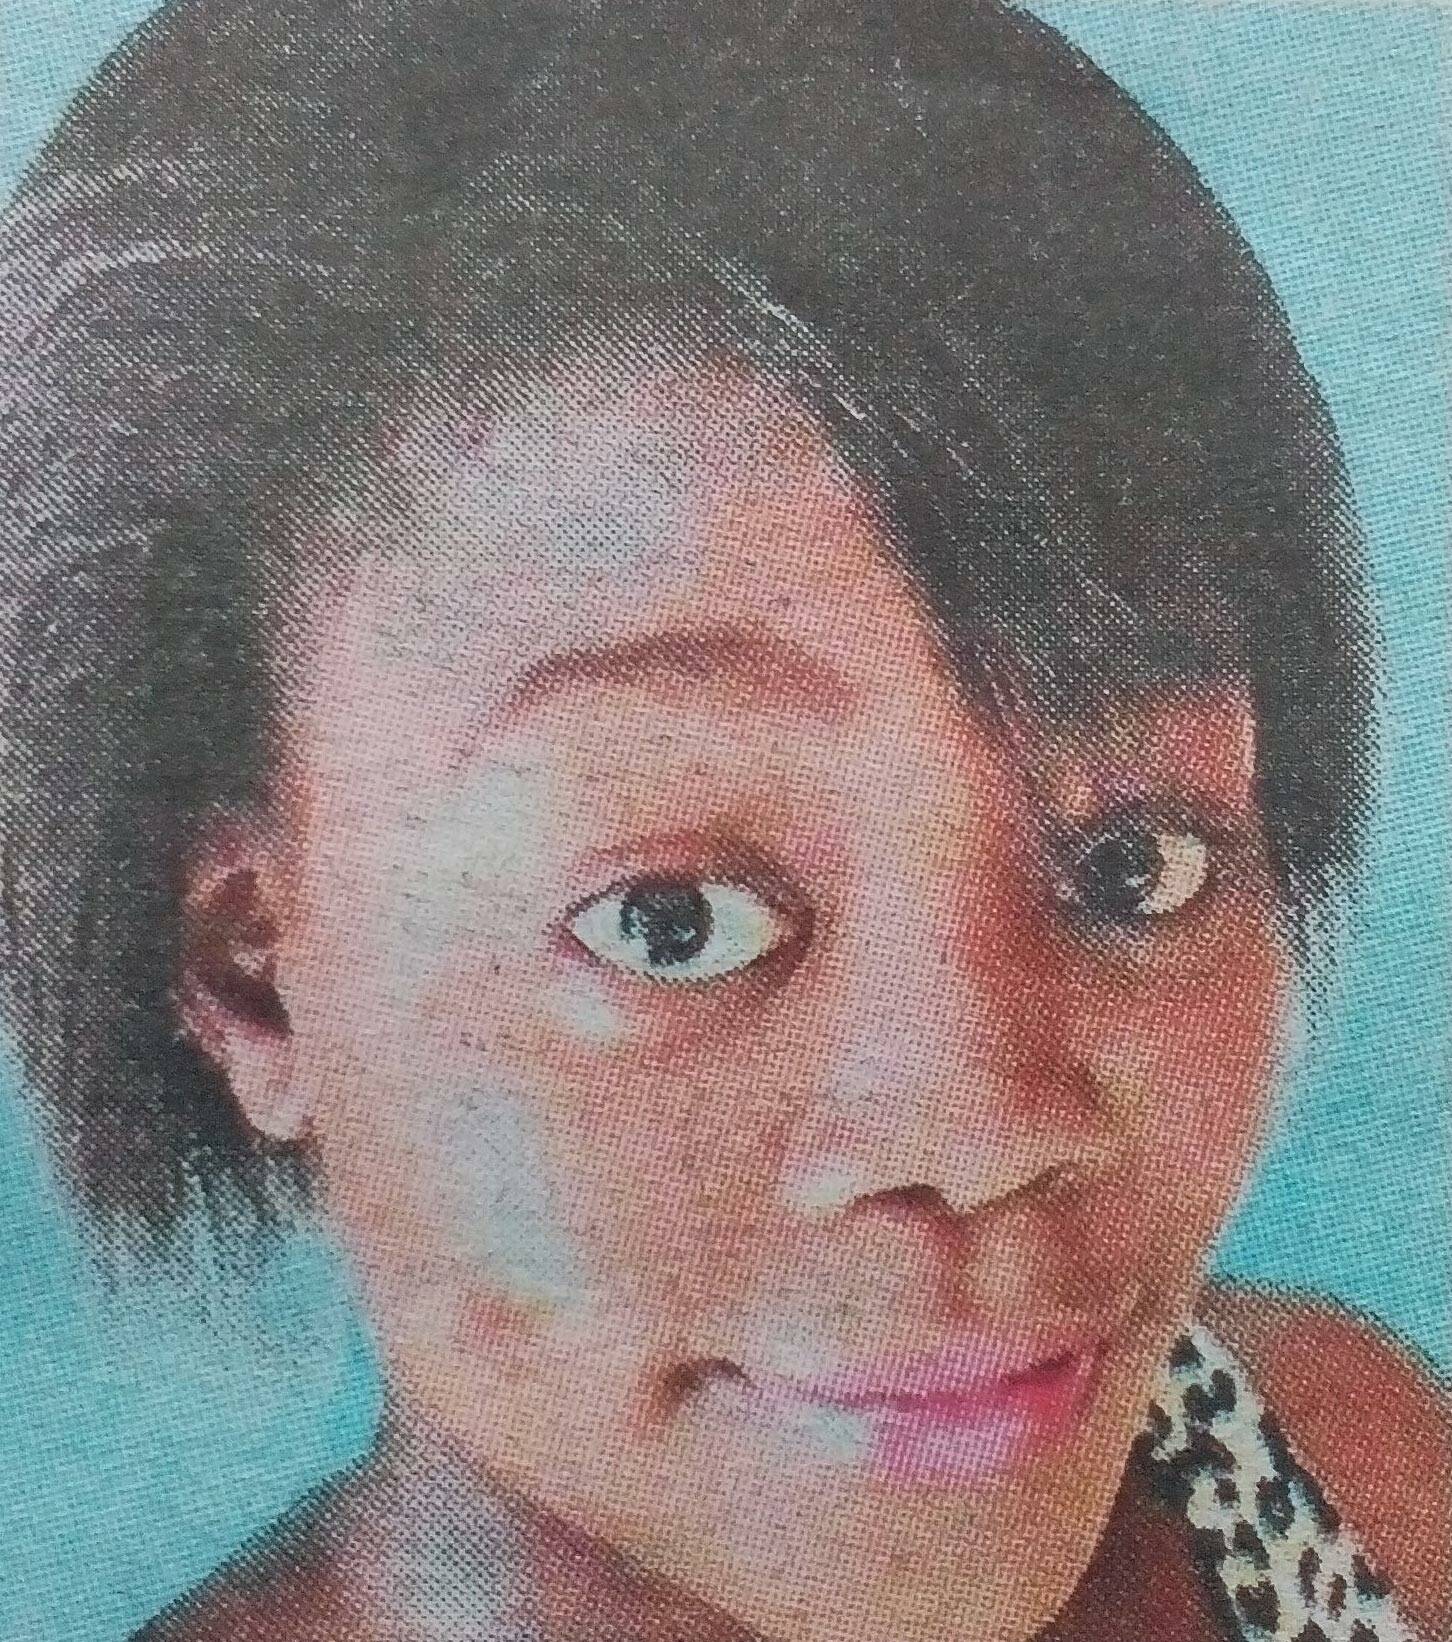 Obituary Image of Wendy Awino